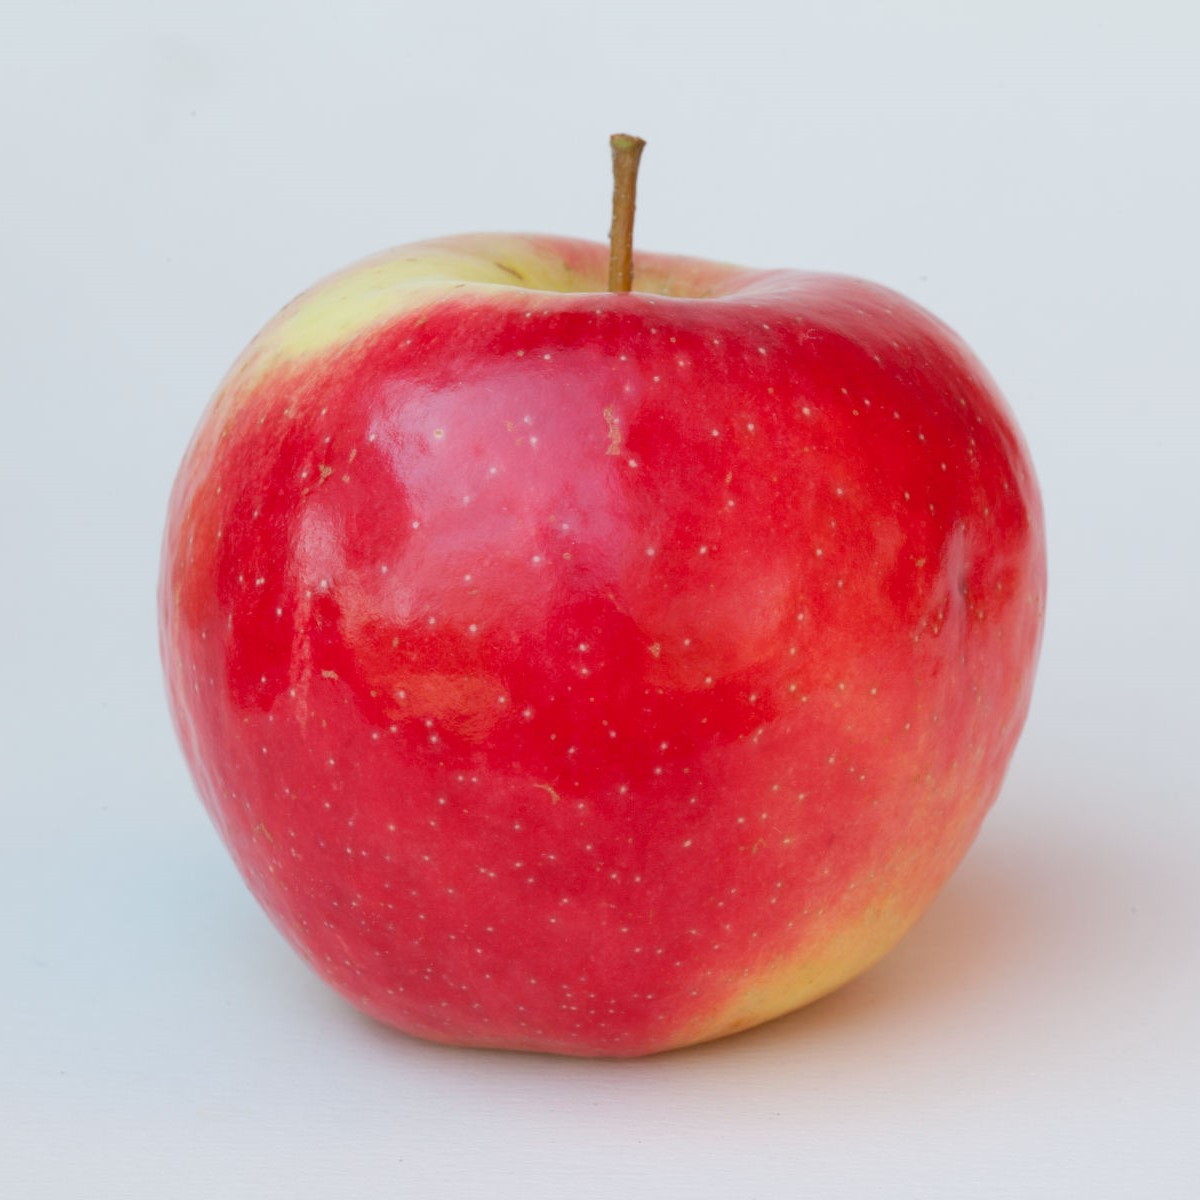 Red baron apple